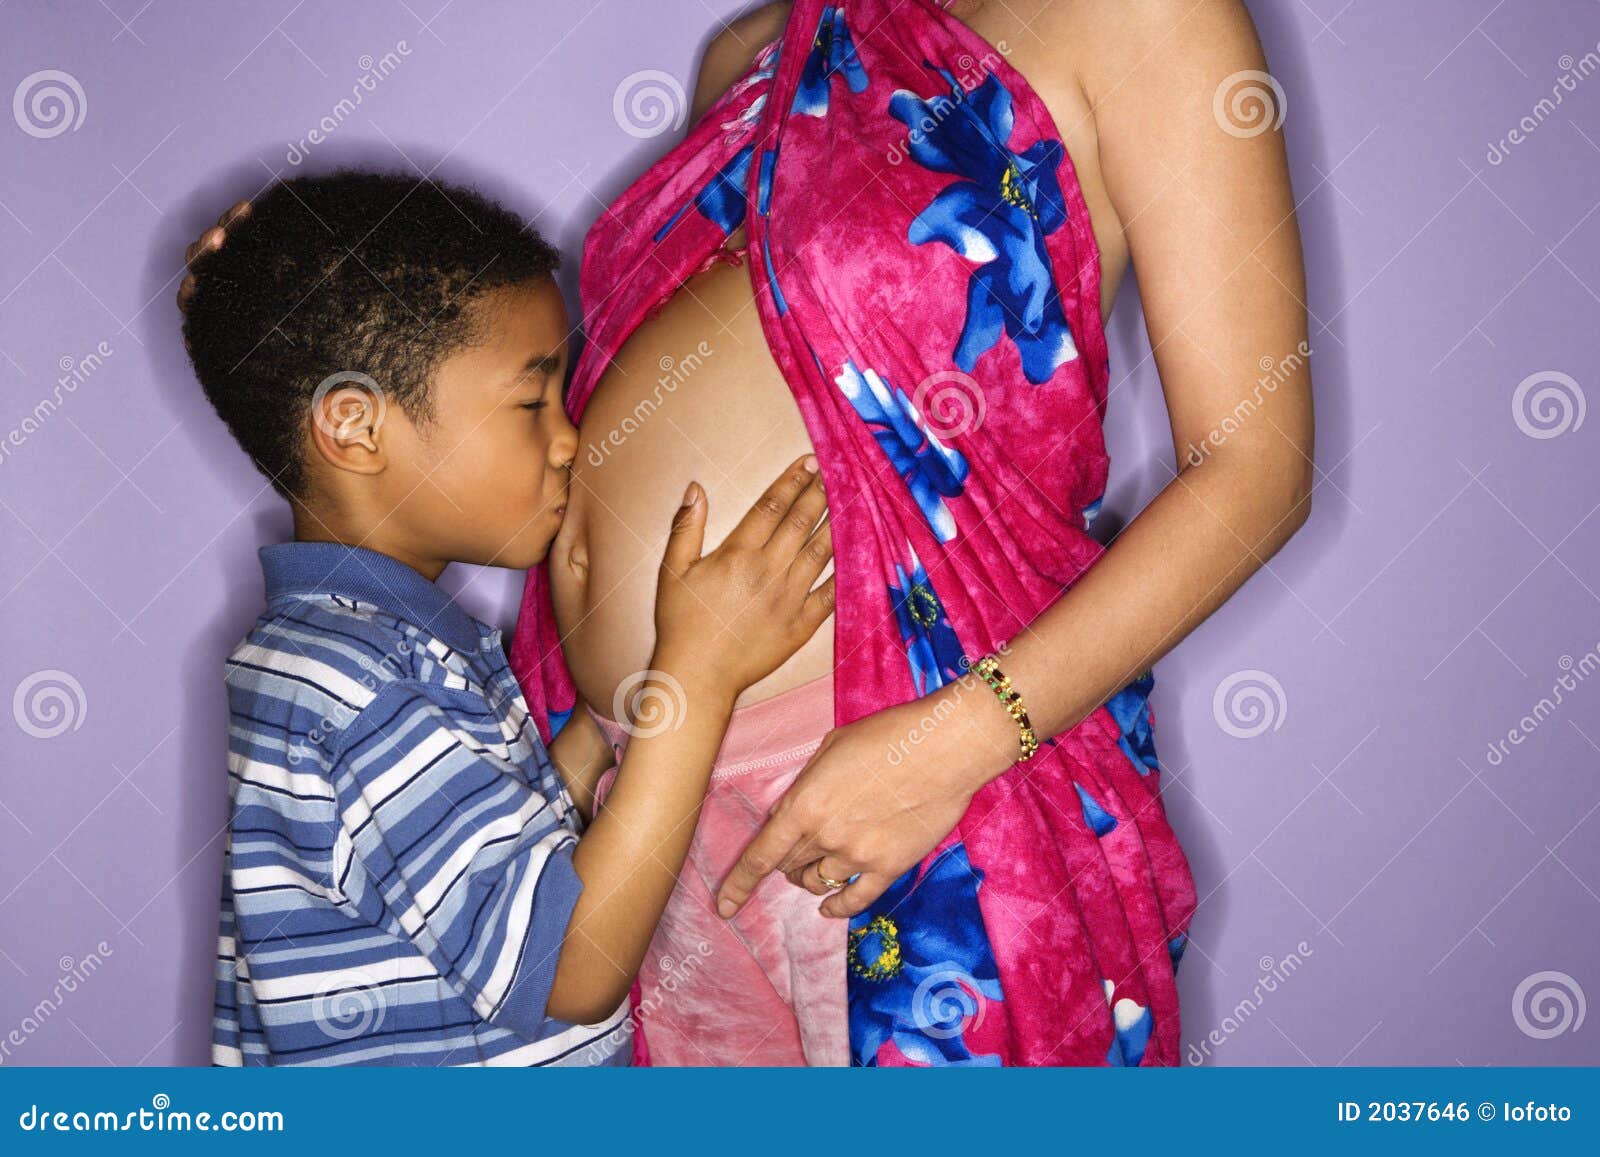 berenice caballero share pregnant cuck tumblr